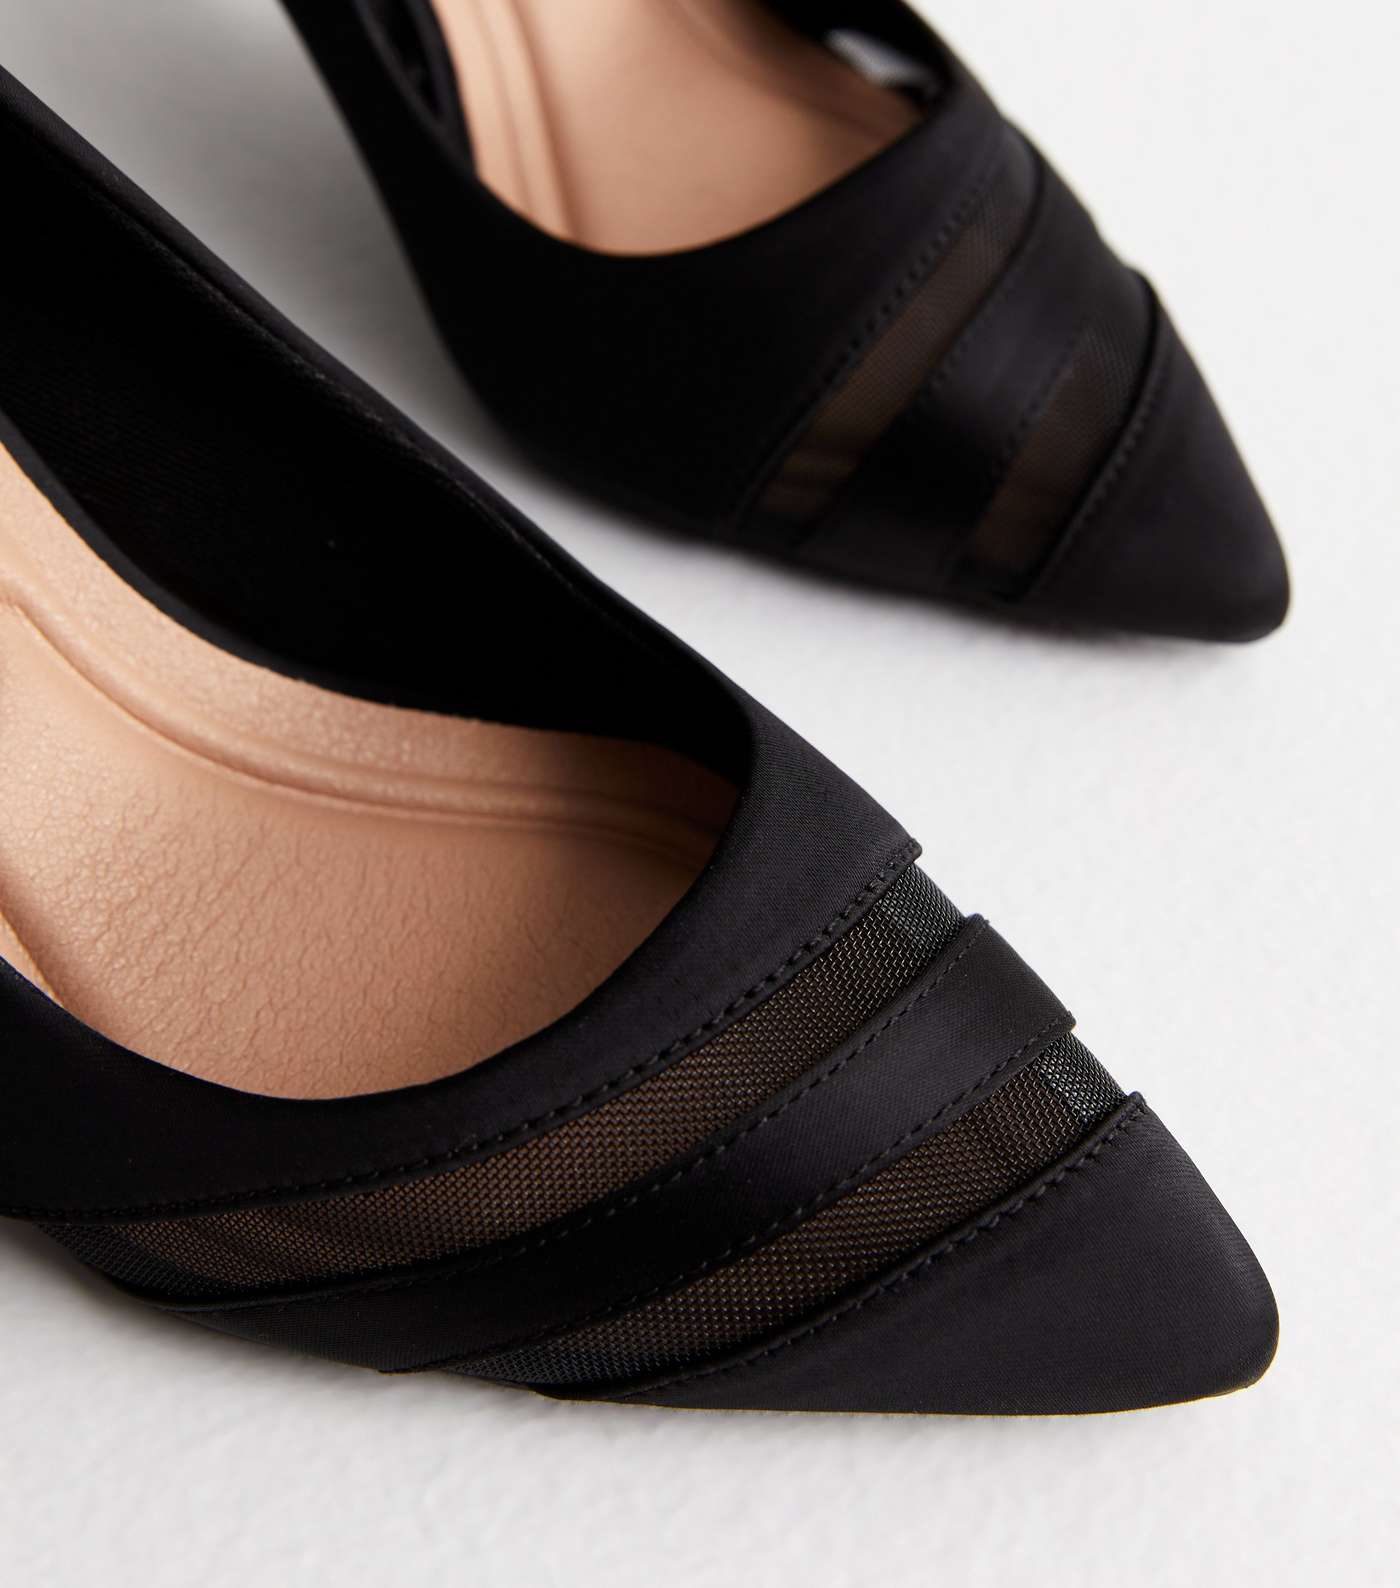 Black Satin Mesh Front Stiletto Heel Court Shoes Image 3